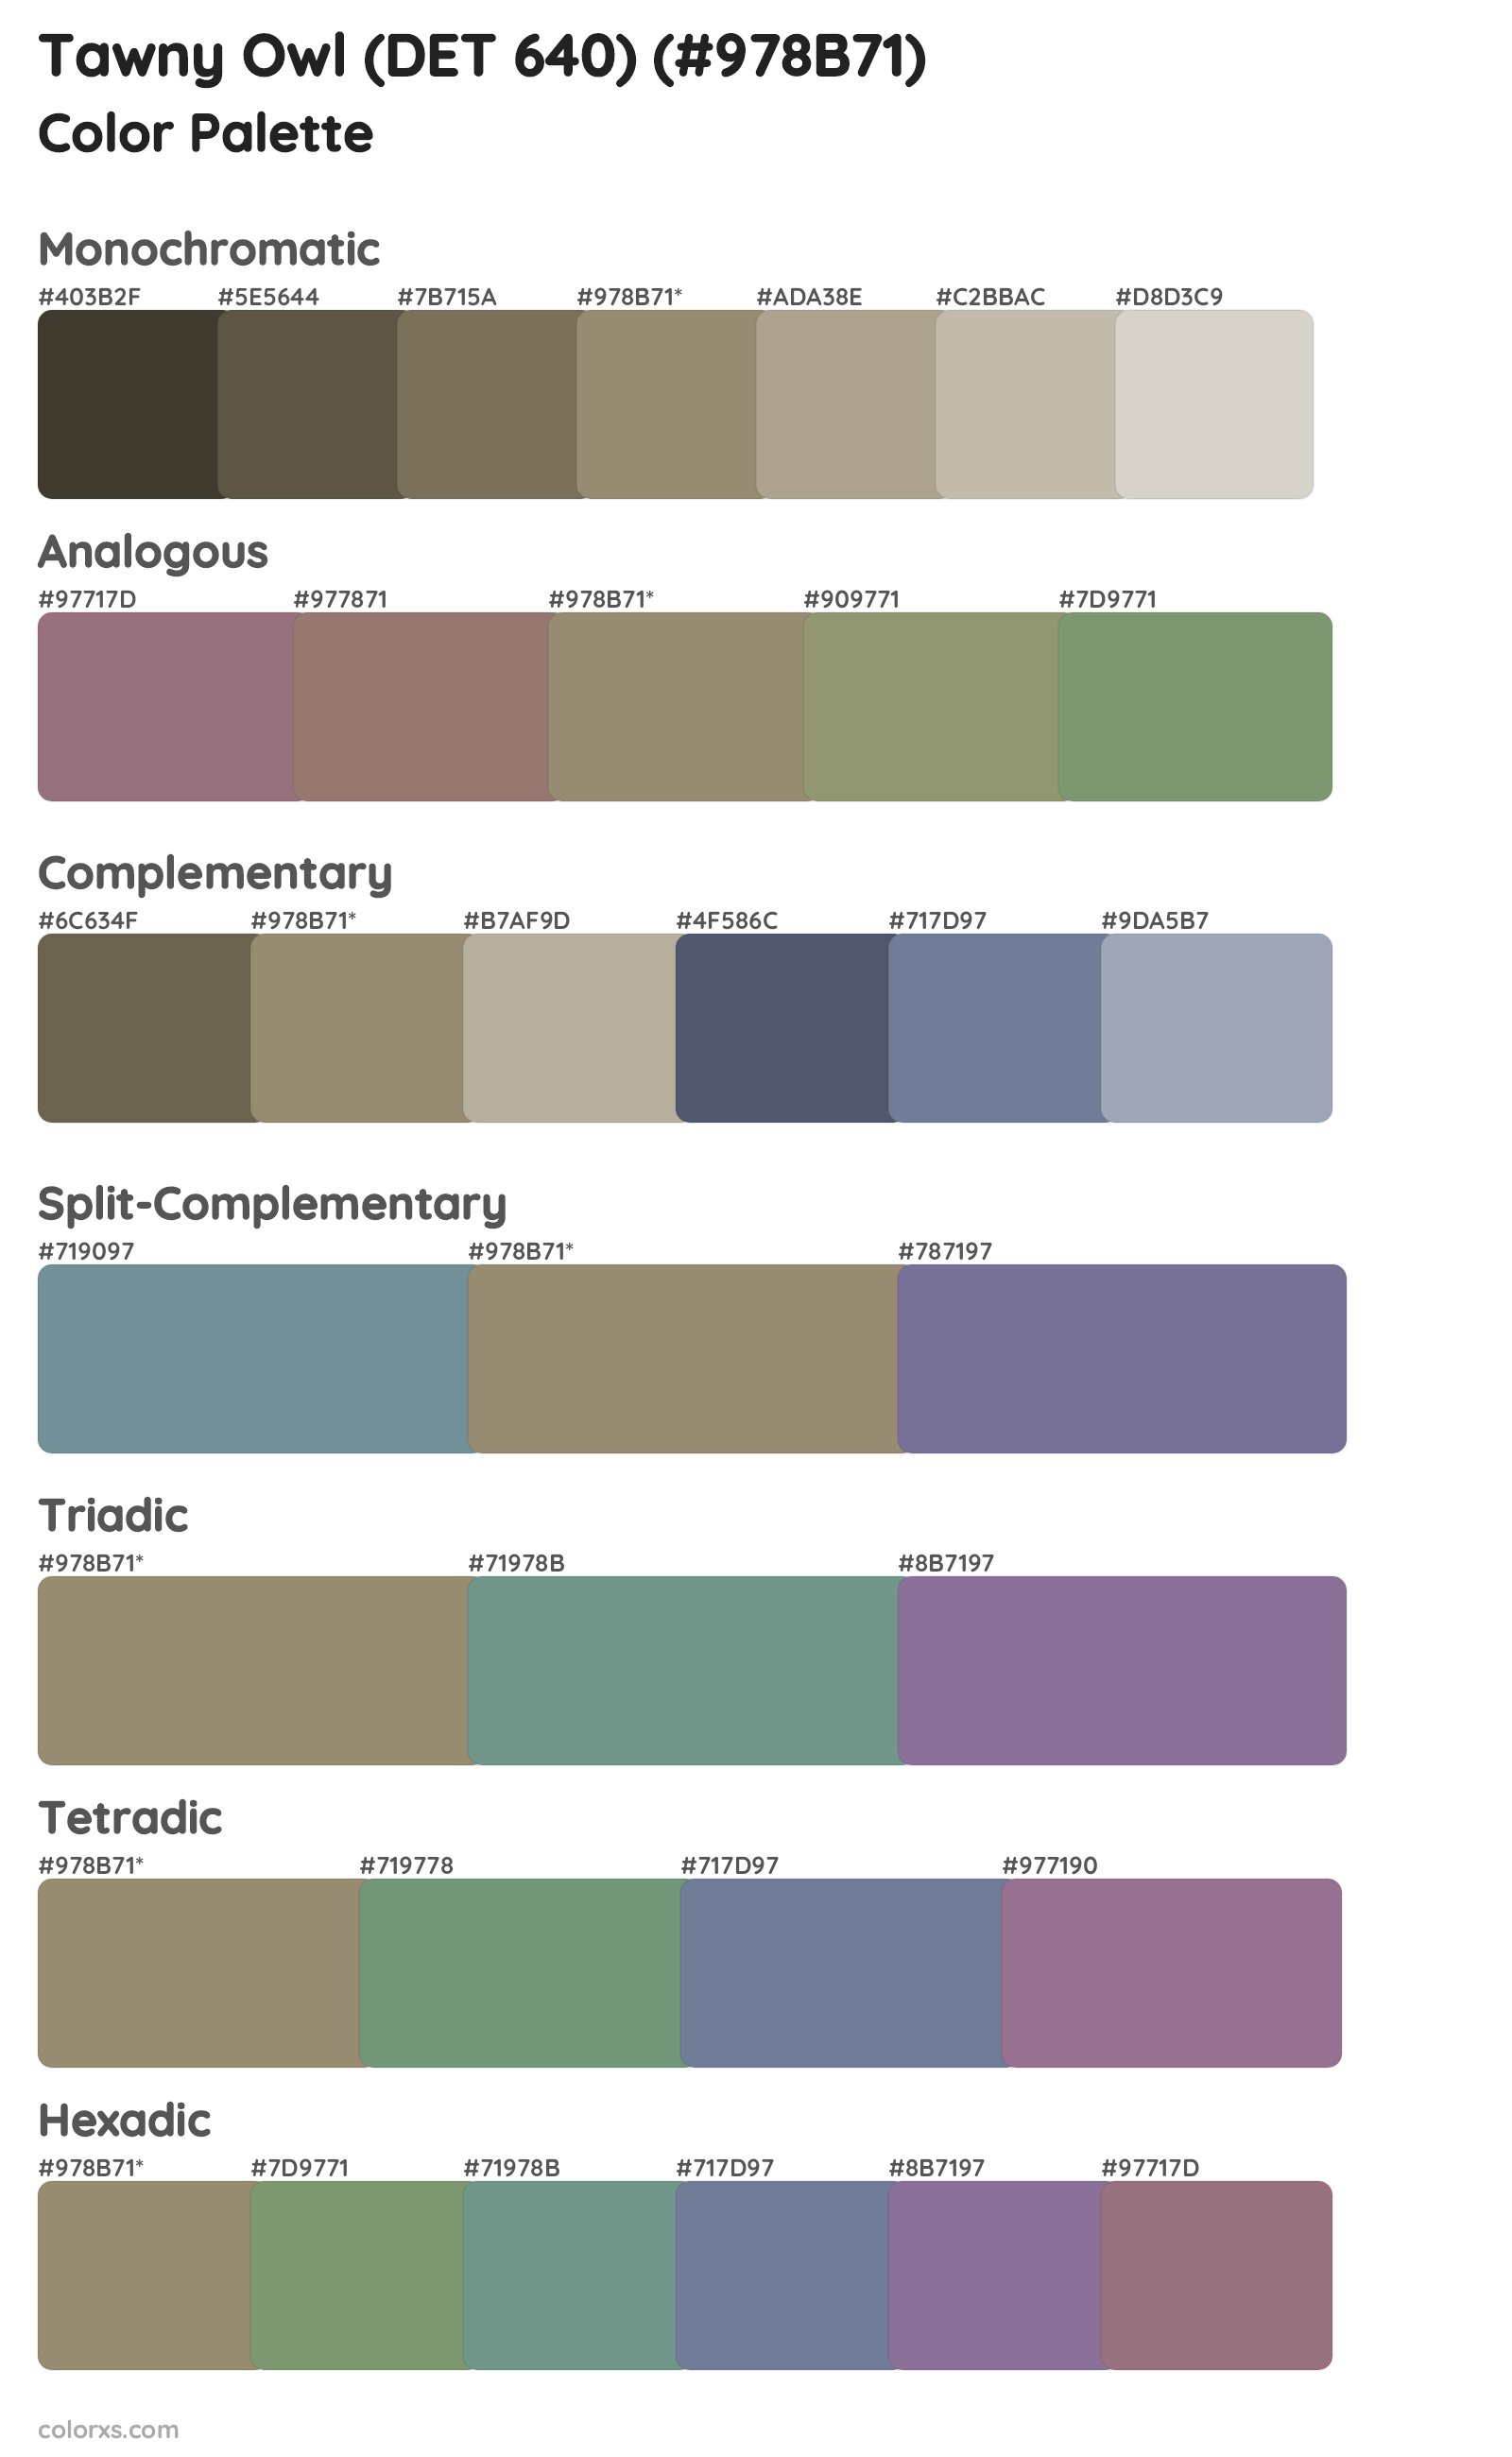 Tawny Owl (DET 640) Color Scheme Palettes